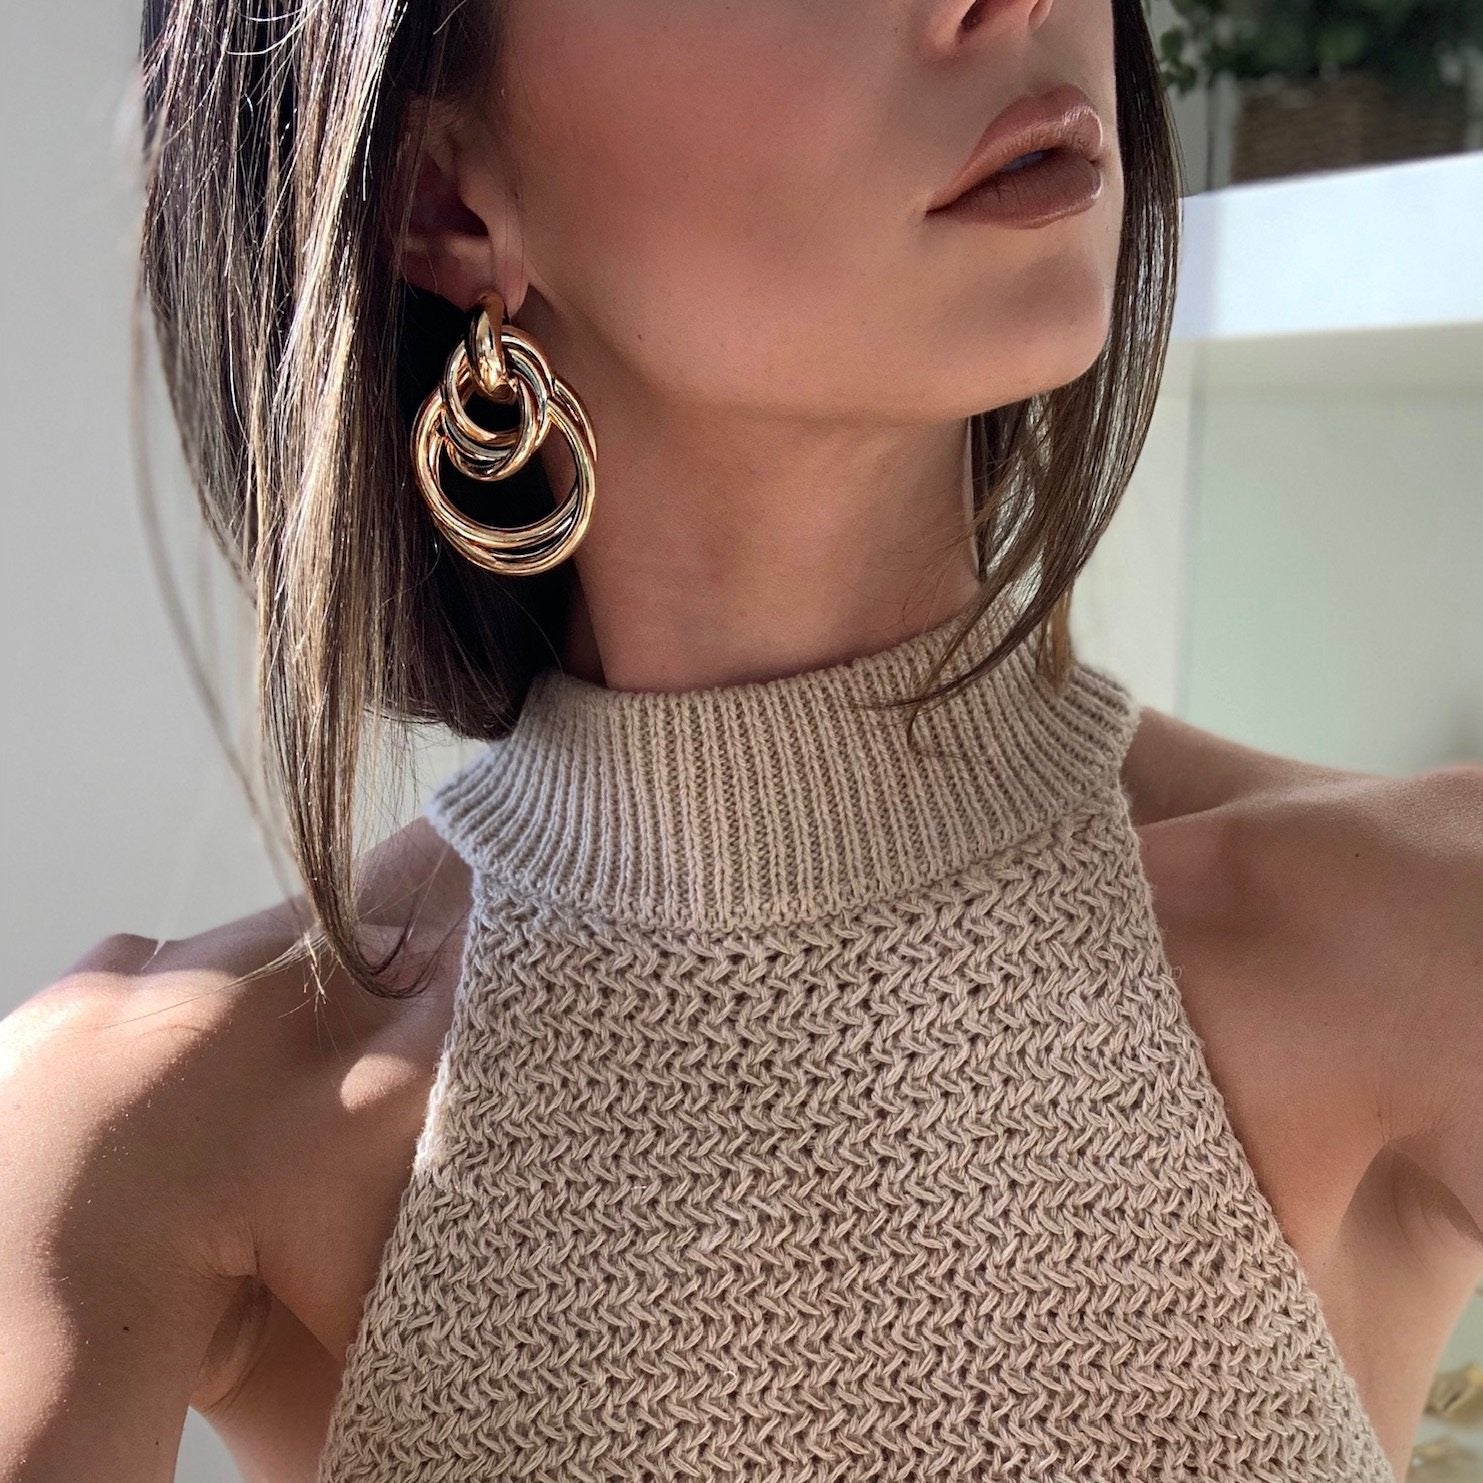 Sarah Double Earrings